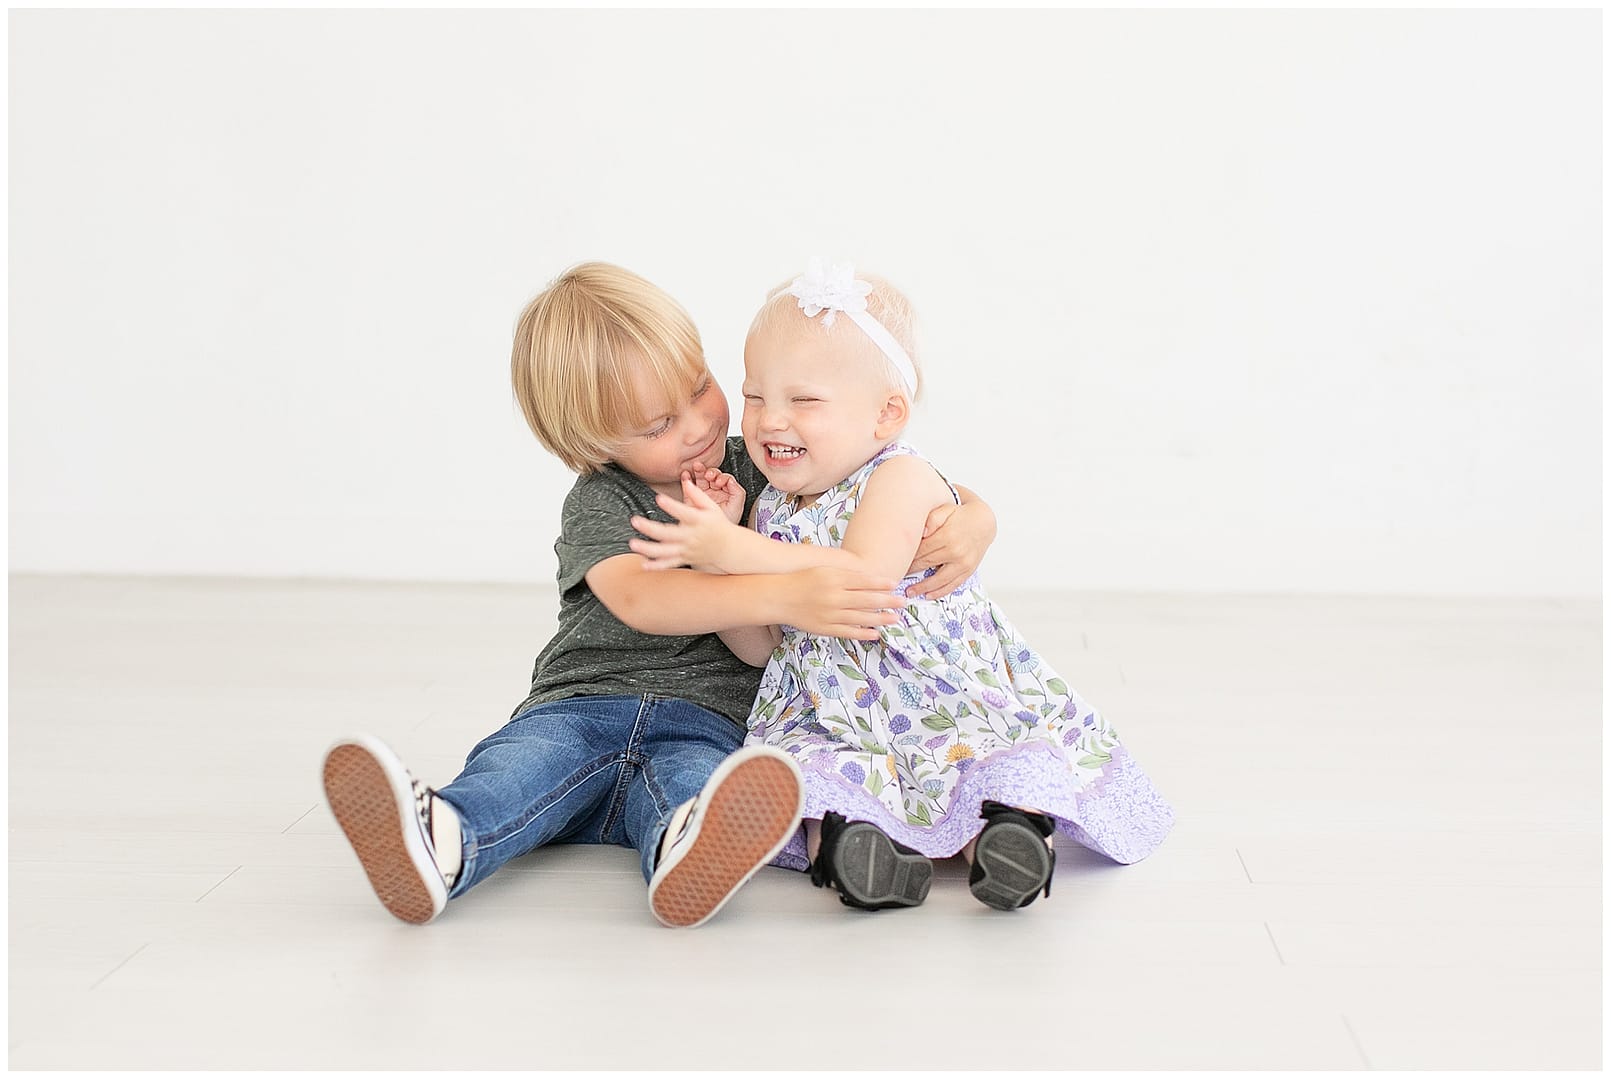 Siblings hug in studio. Photos by Tiffany Hix Photography.